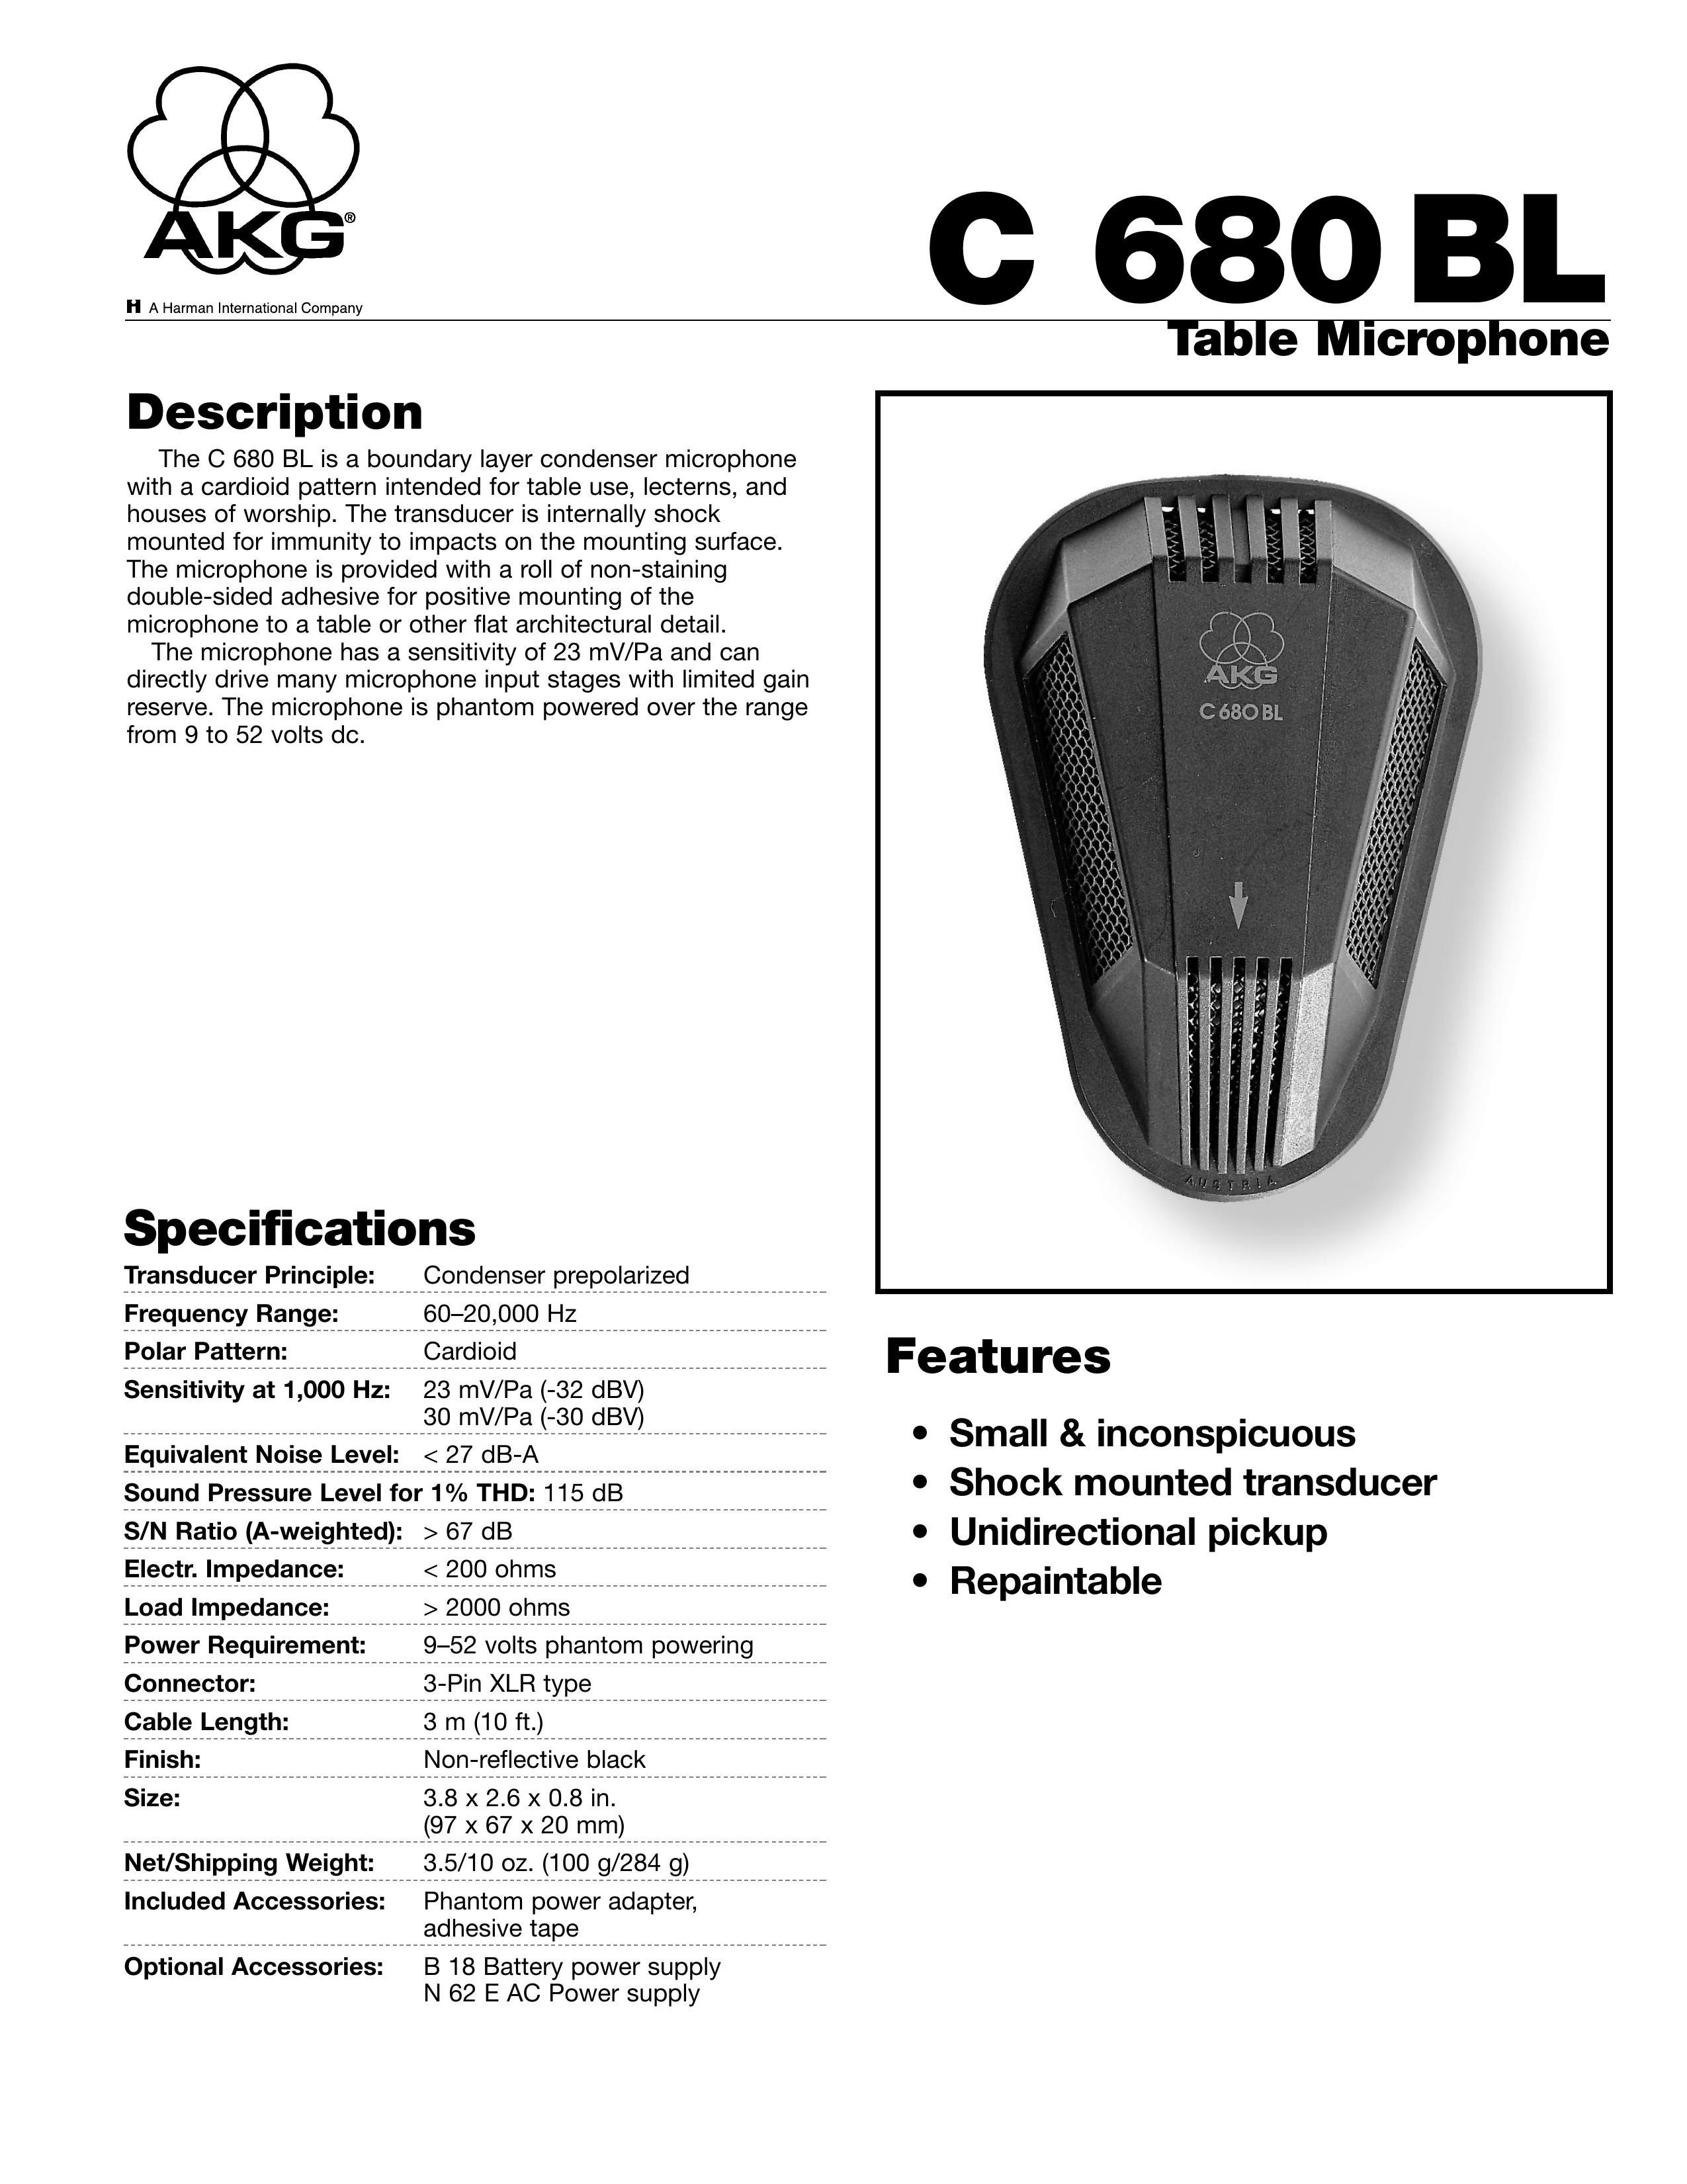 AKG Acoustics C680BL Microphone User Manual